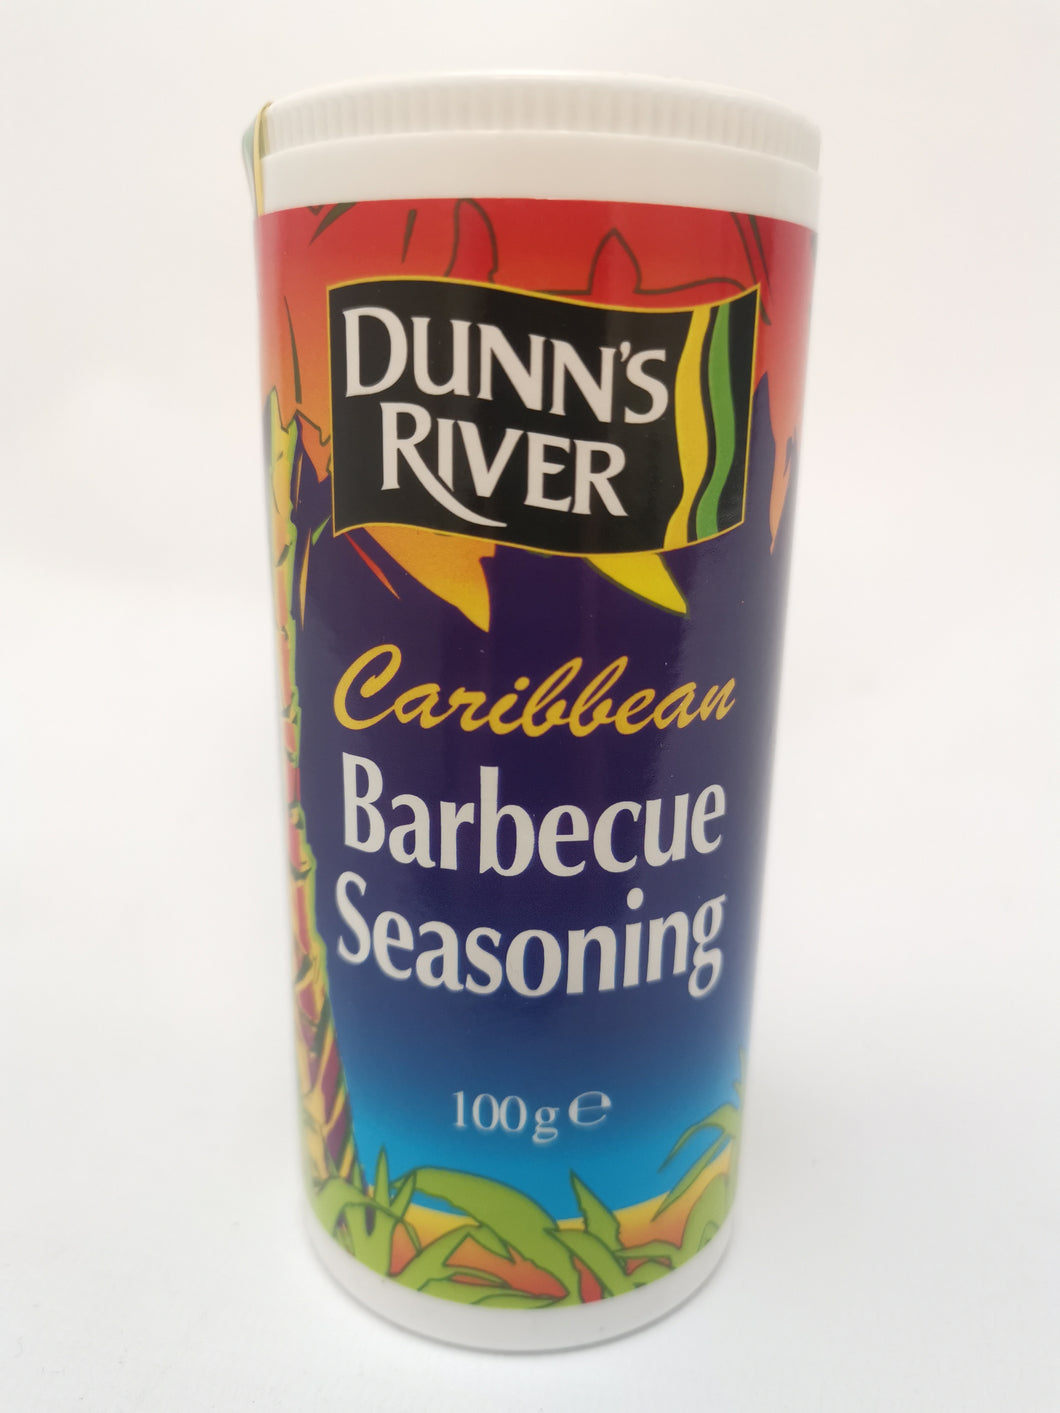 Dunn's River Caribbean Barbecue Seasoning 100g